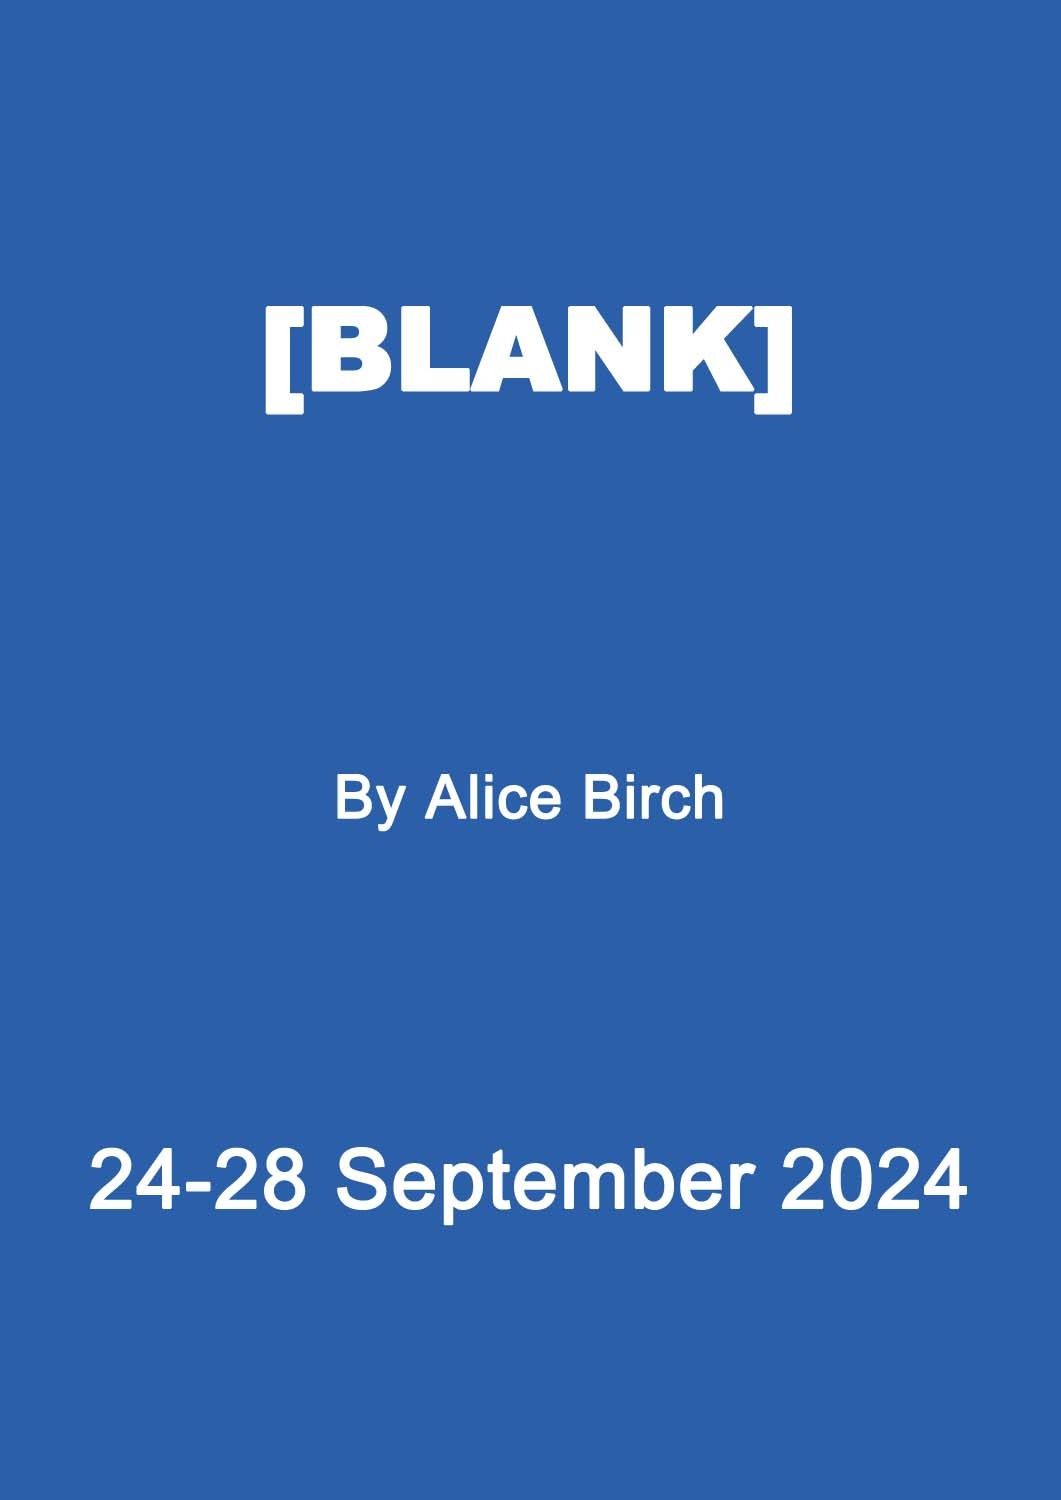 [BLANK] flyer image